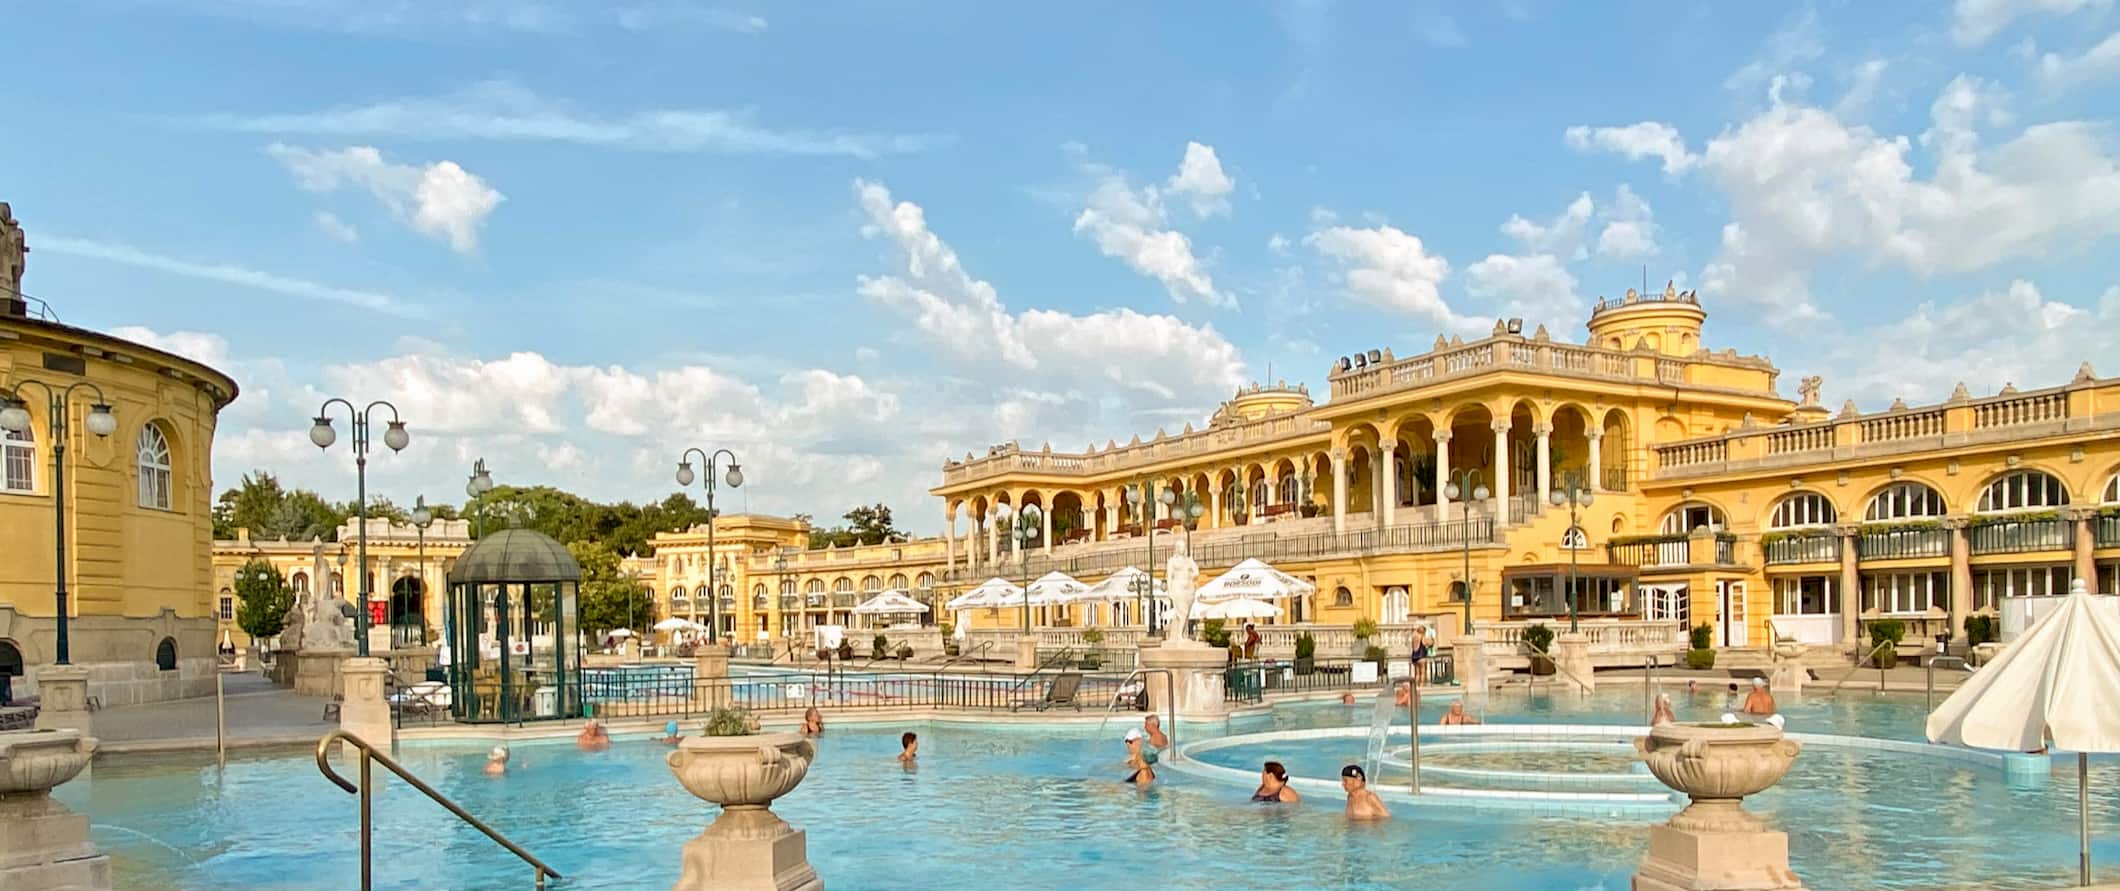 The famous Széchenyi bathhouse in beautiful Budapest, Hungary